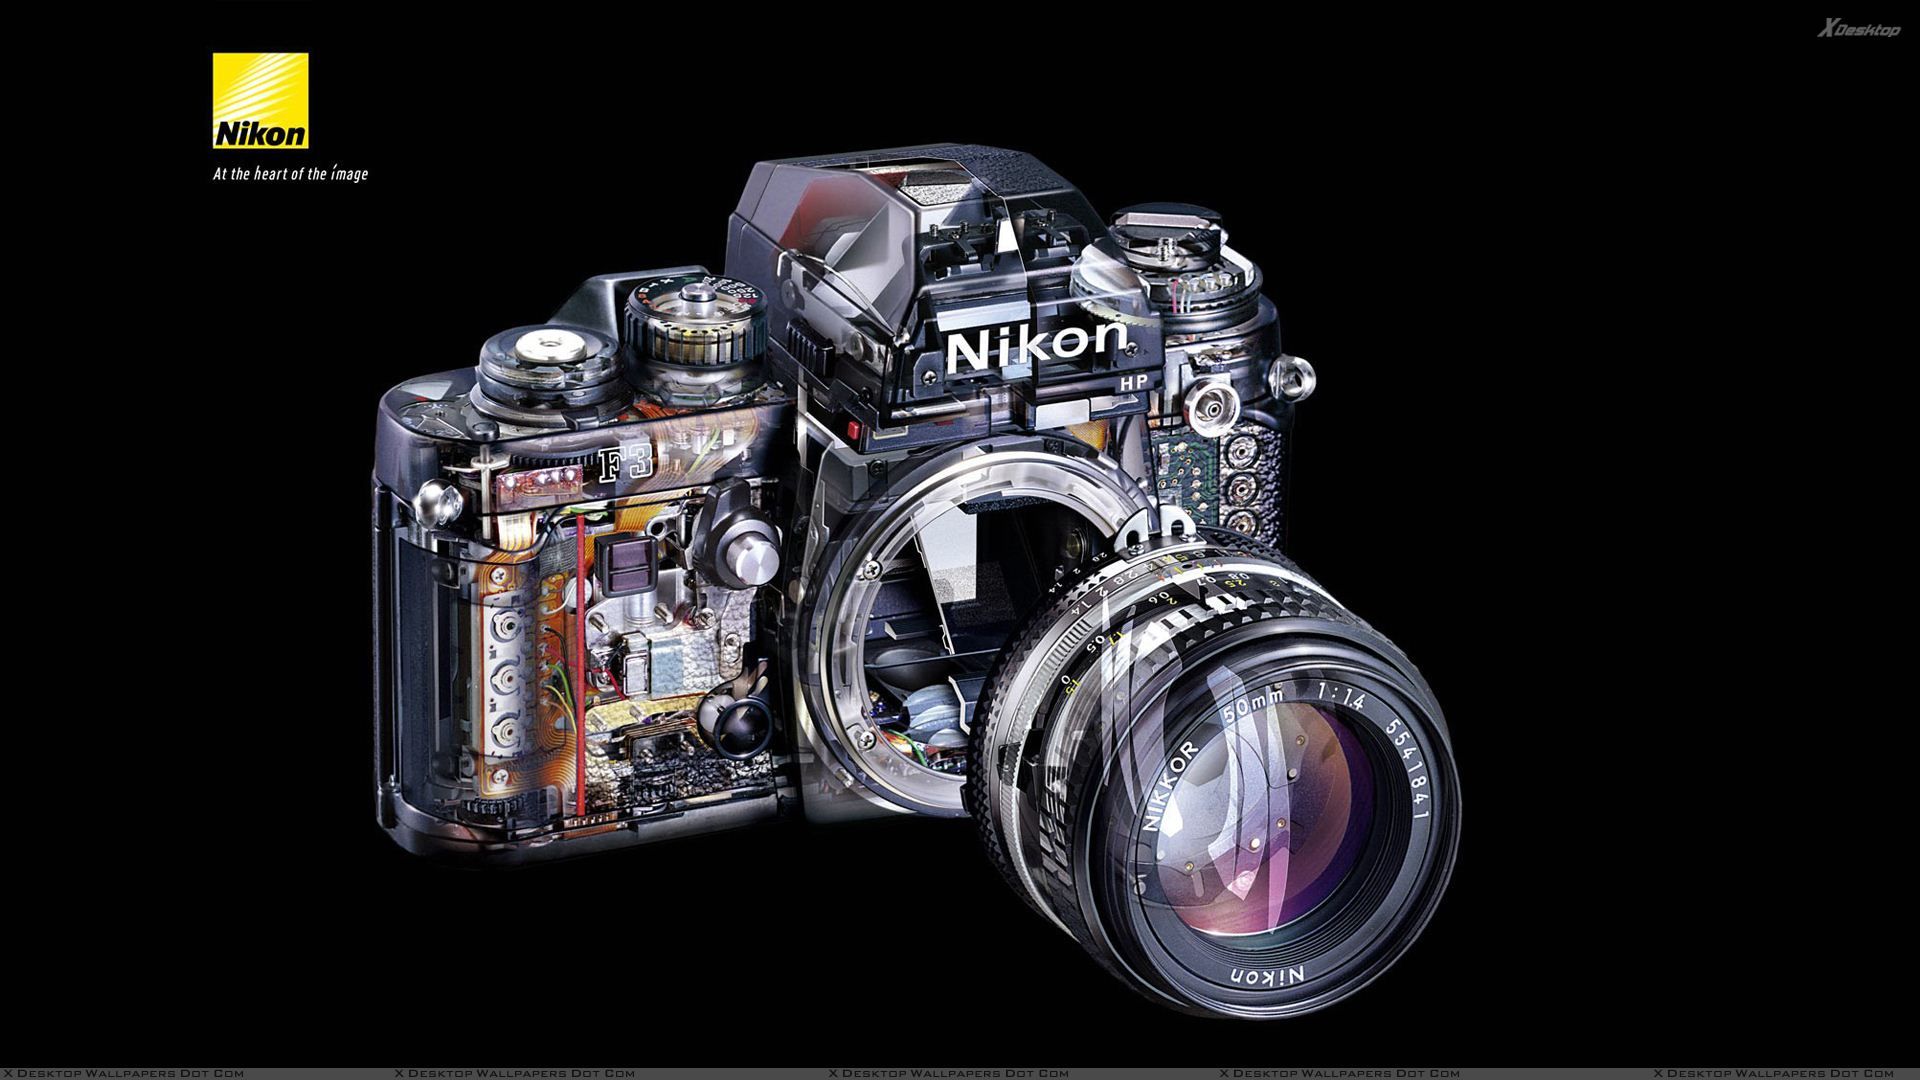 Inside The Nikon Camera Wallpaper